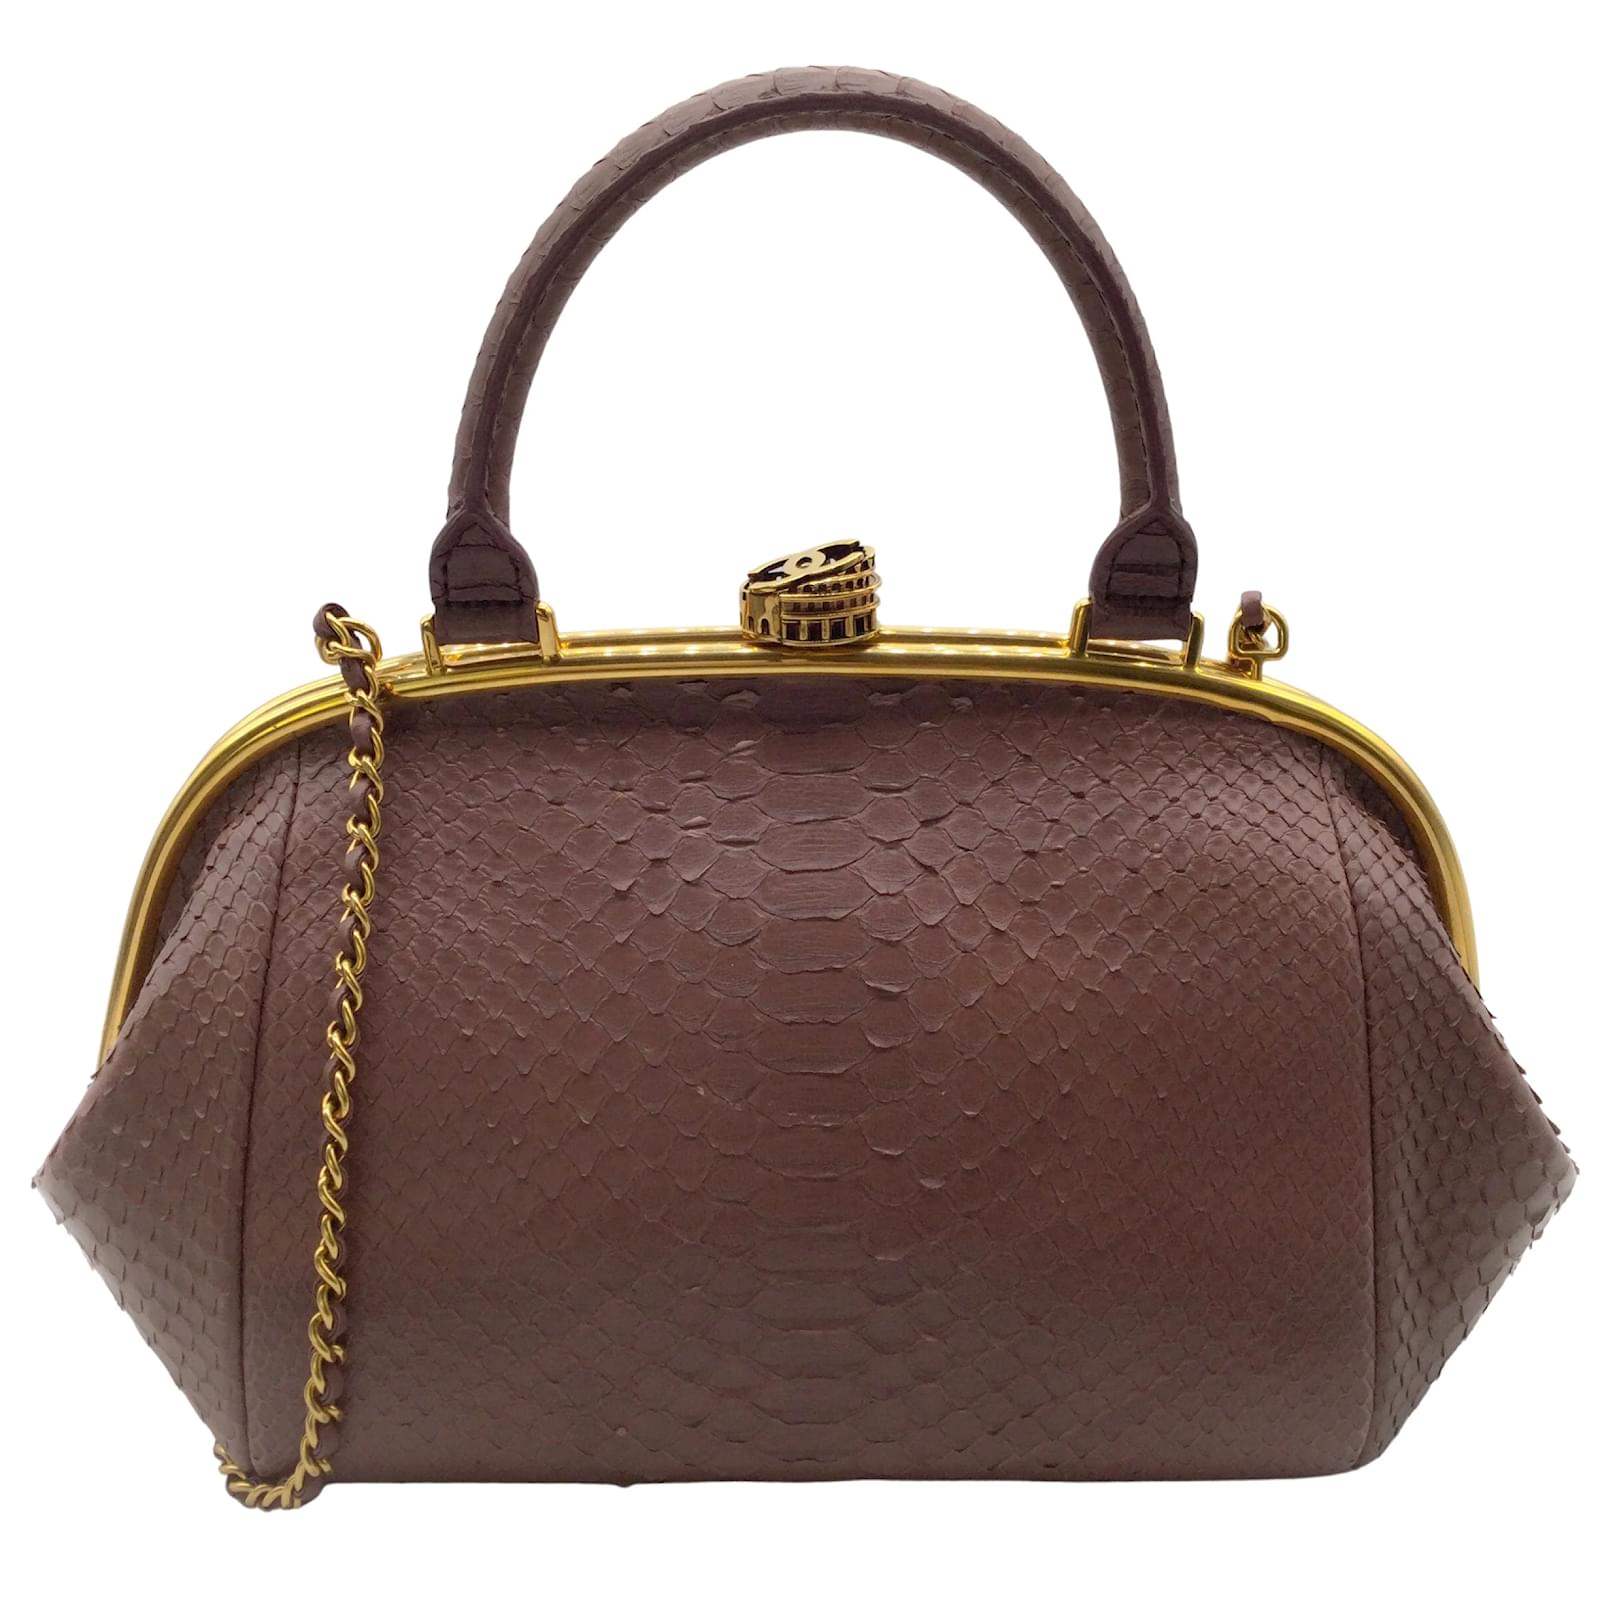 Handbags Chanel Chanel Bowling 2016 Retro Donna Large Mauve Python Skin Leather Shoulder Bag